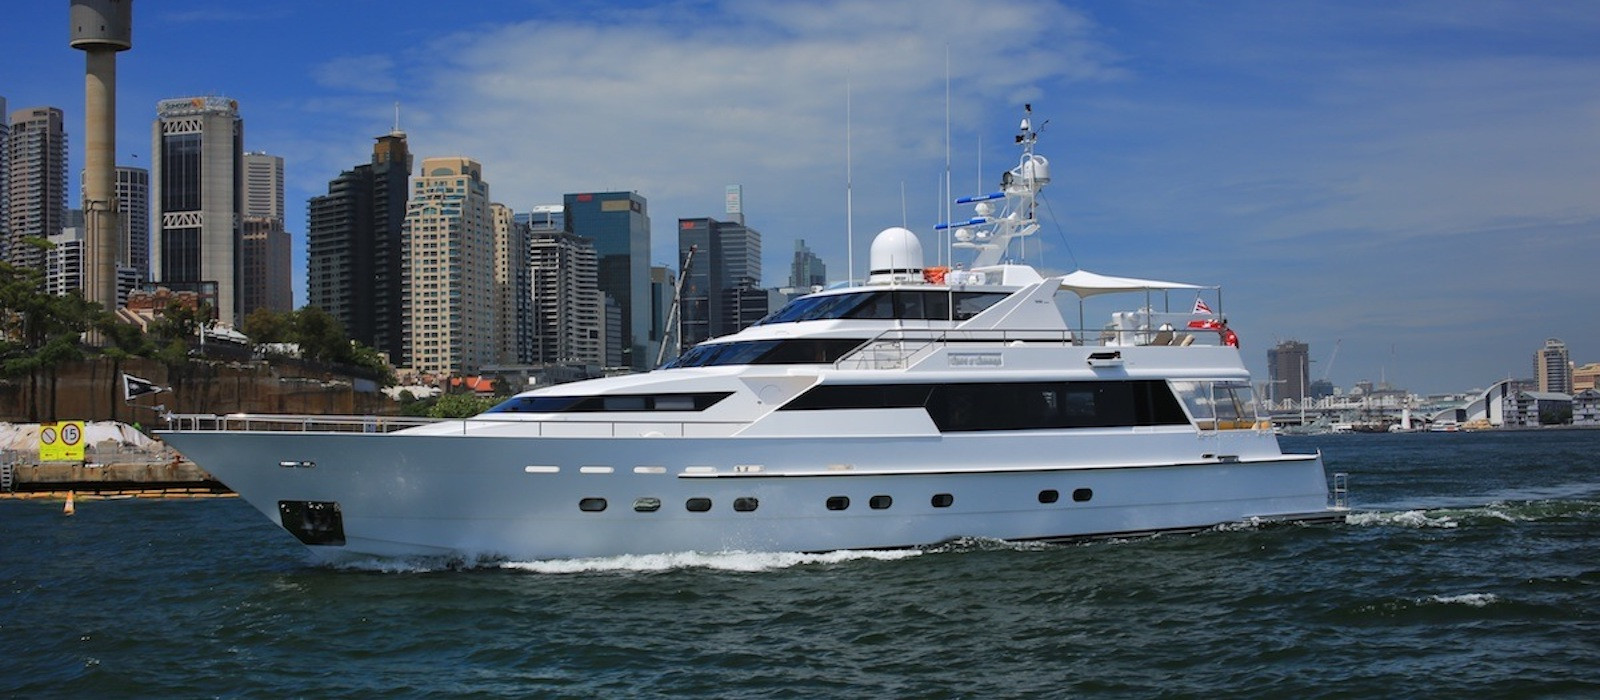 Oscar II luxury boat hire cruising Sydney Harbour